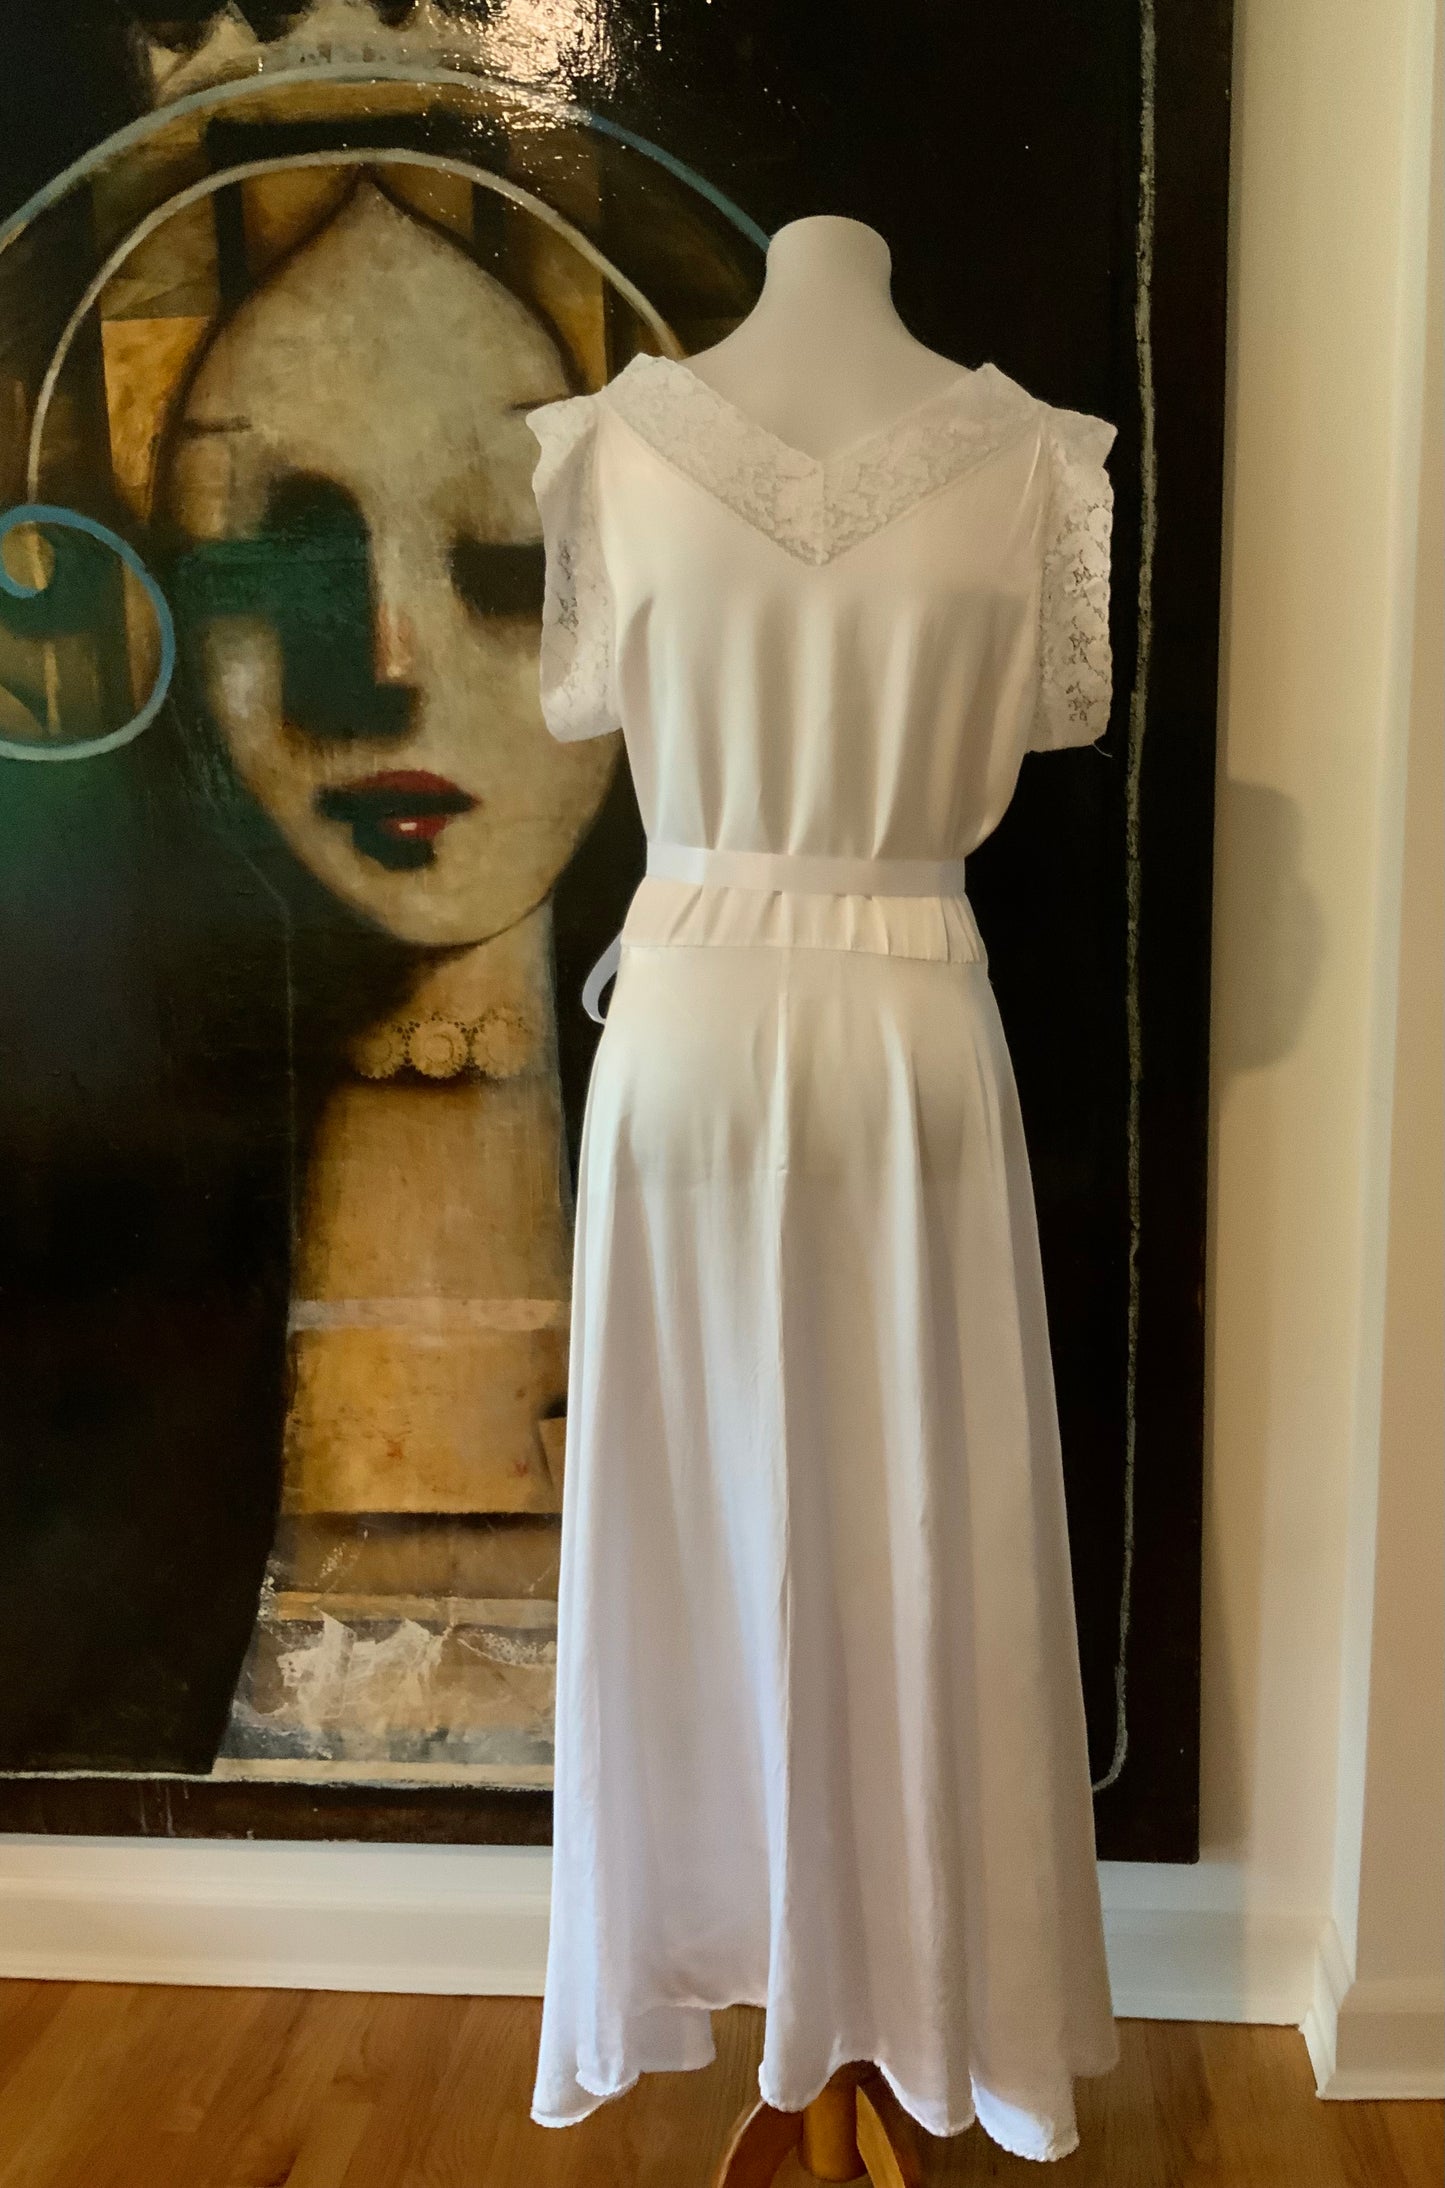 Bridal Nightgown Satin - 40s